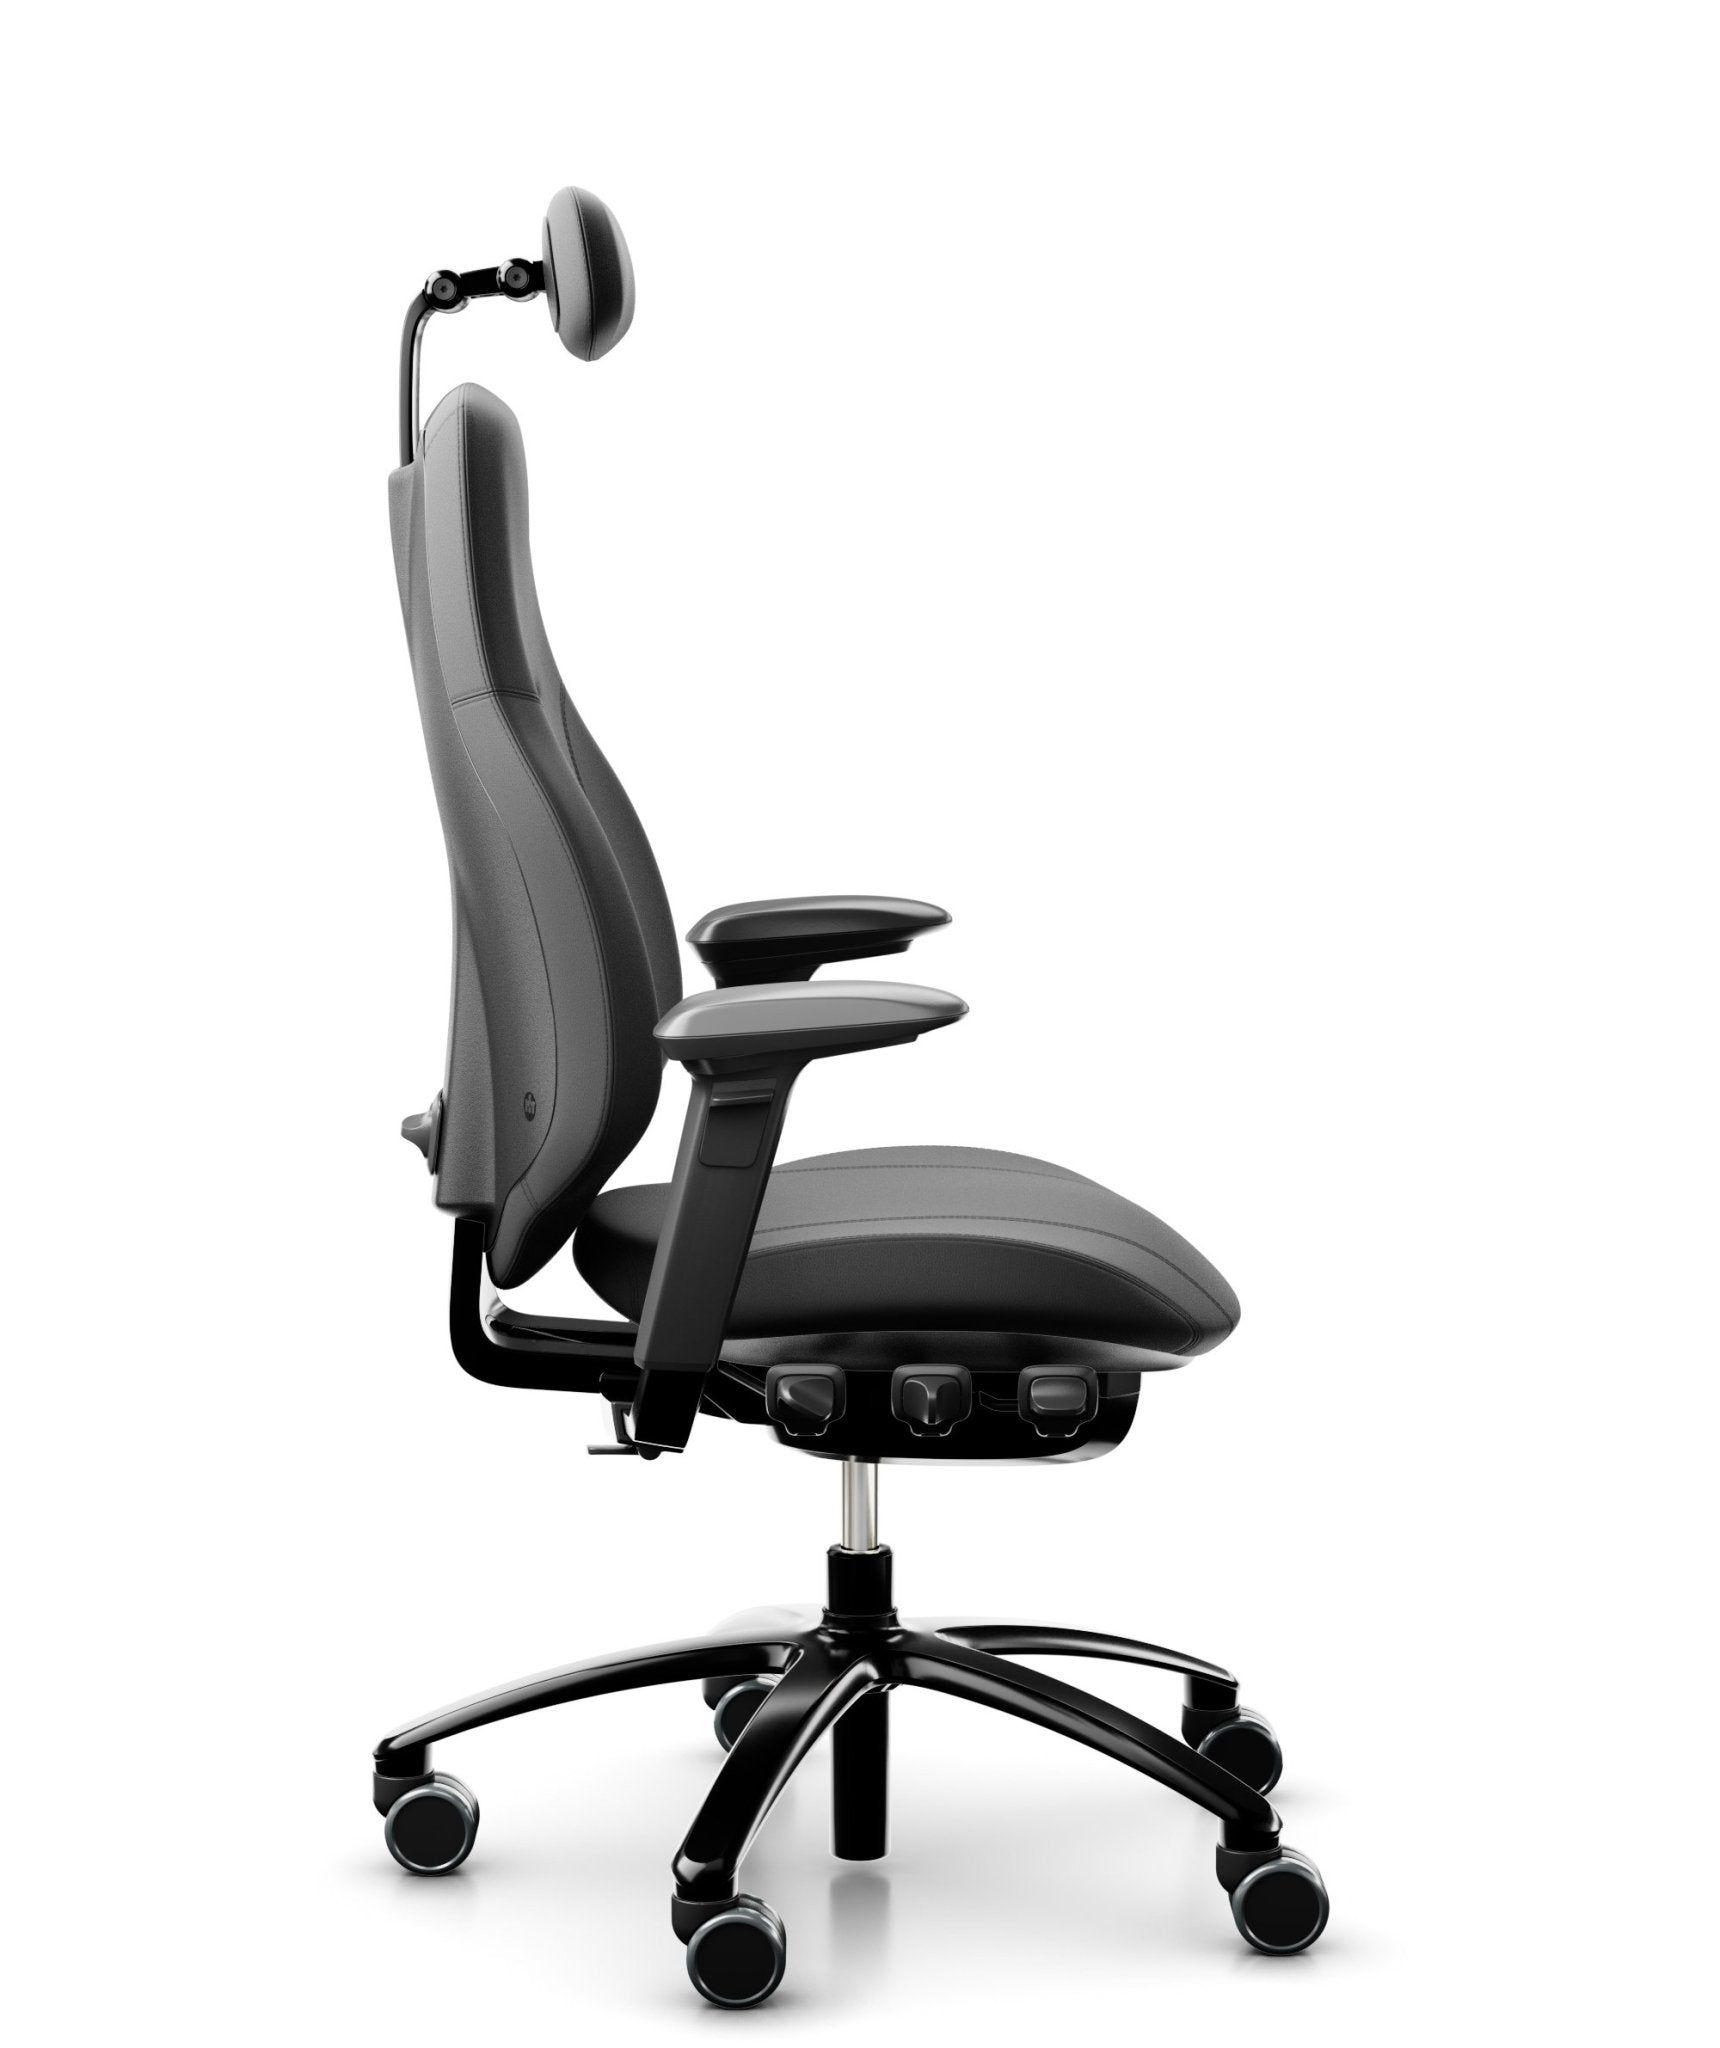 RH Mereo 220 Black Leather ergonomic chair